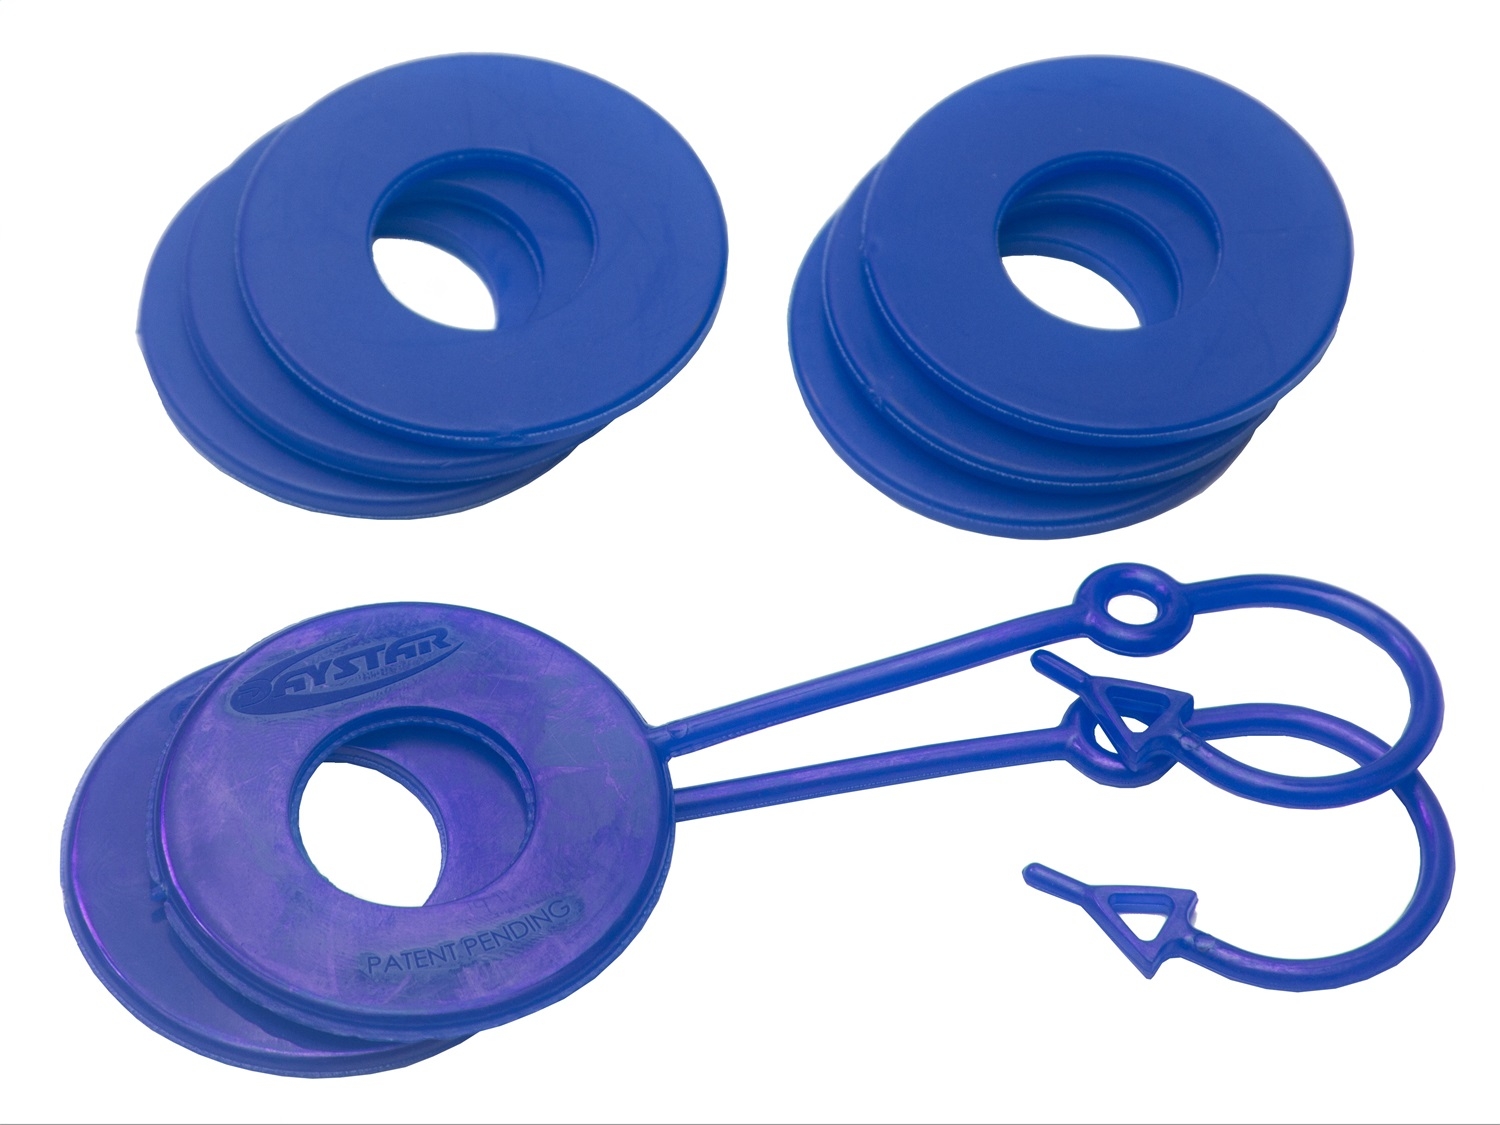 Daystar D Ring Isolator Washer Locker Kit 2 Locking Washers And 6 Non-Locking Washers Blue,